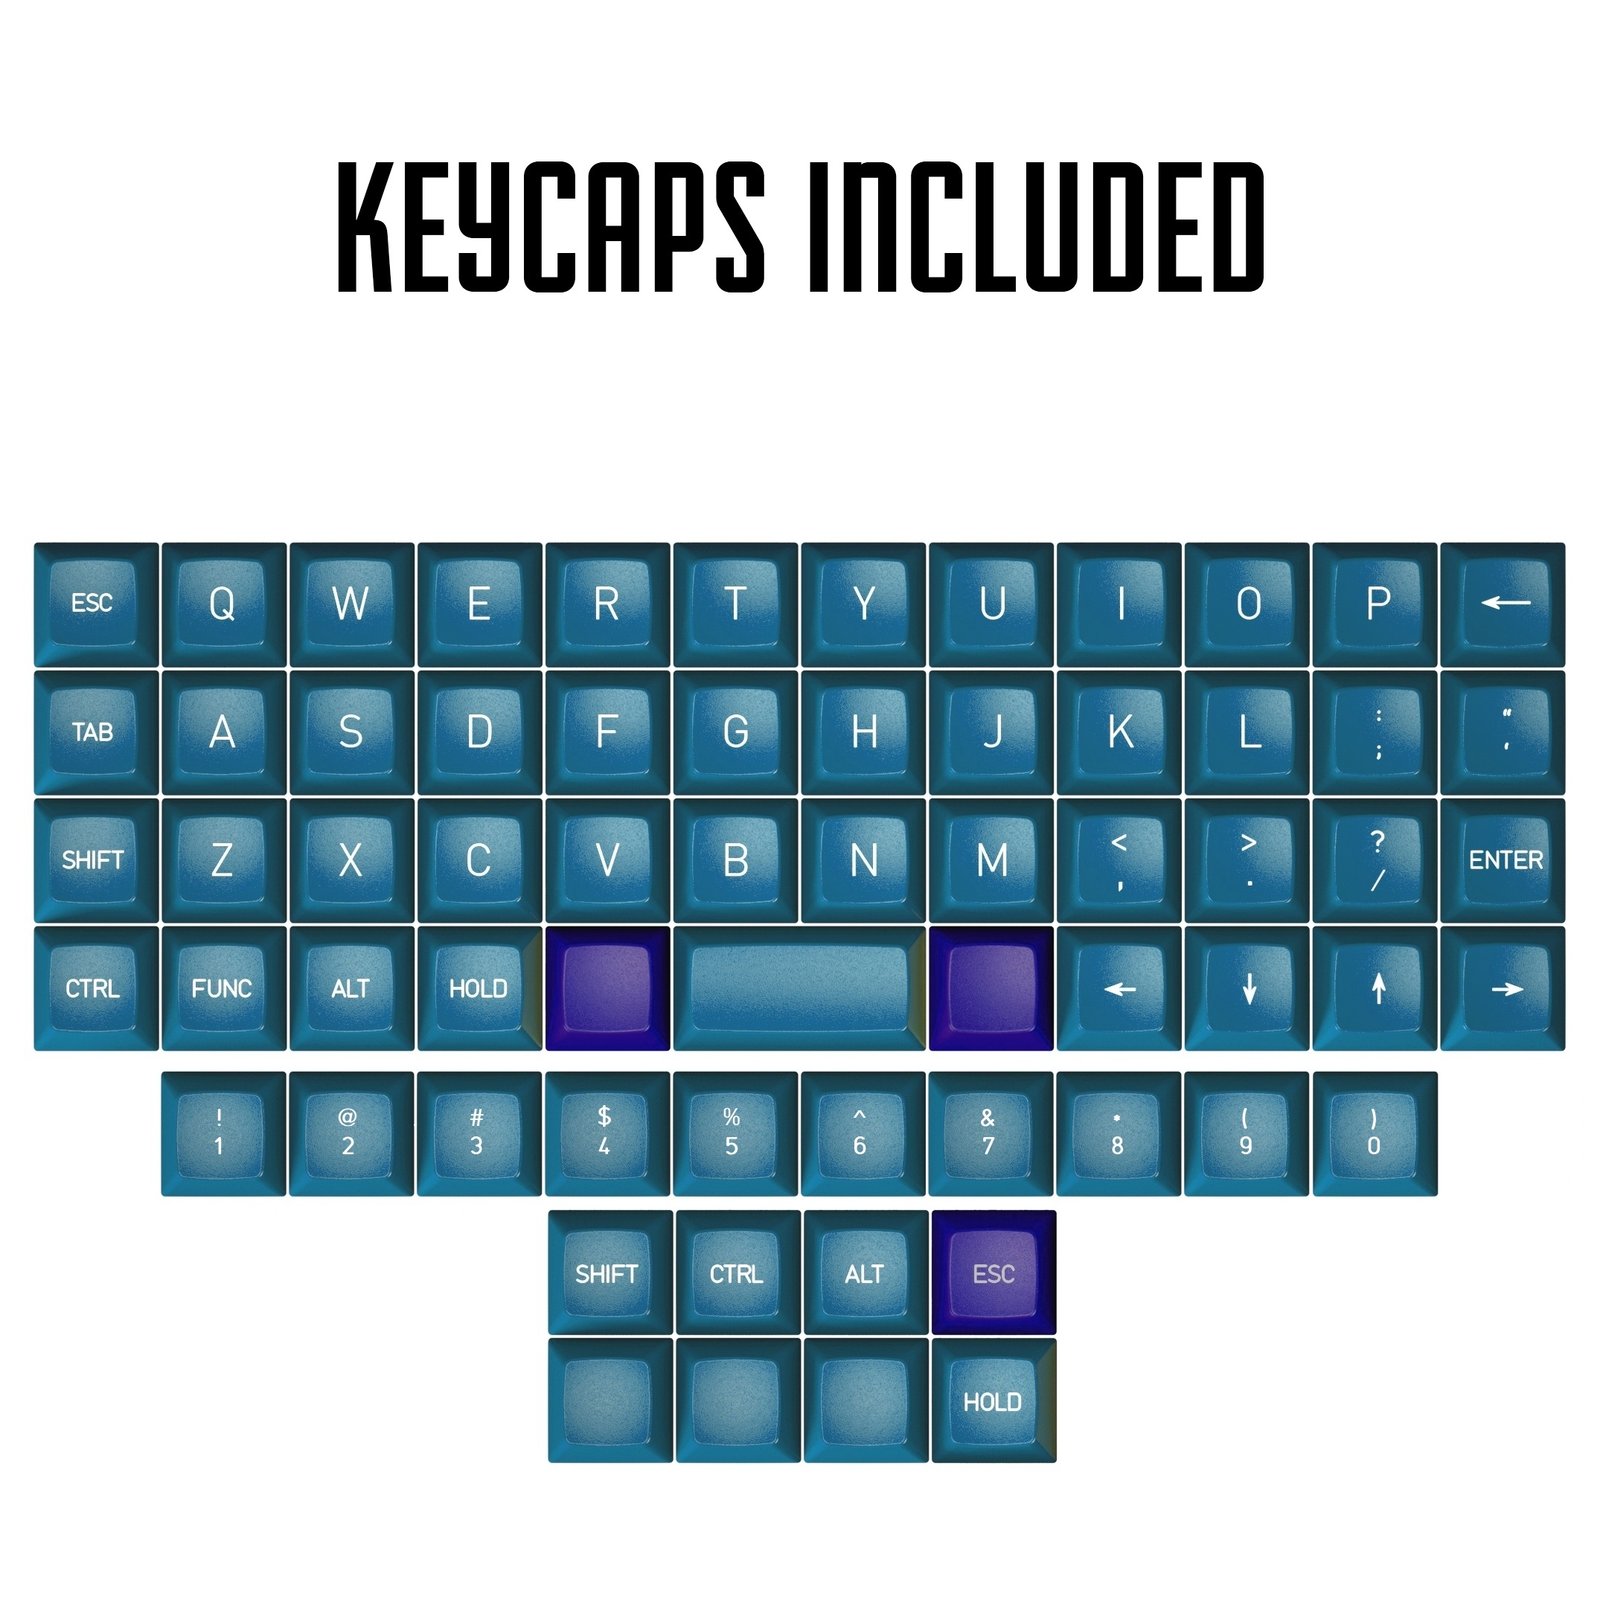 aurora keyboard profiles